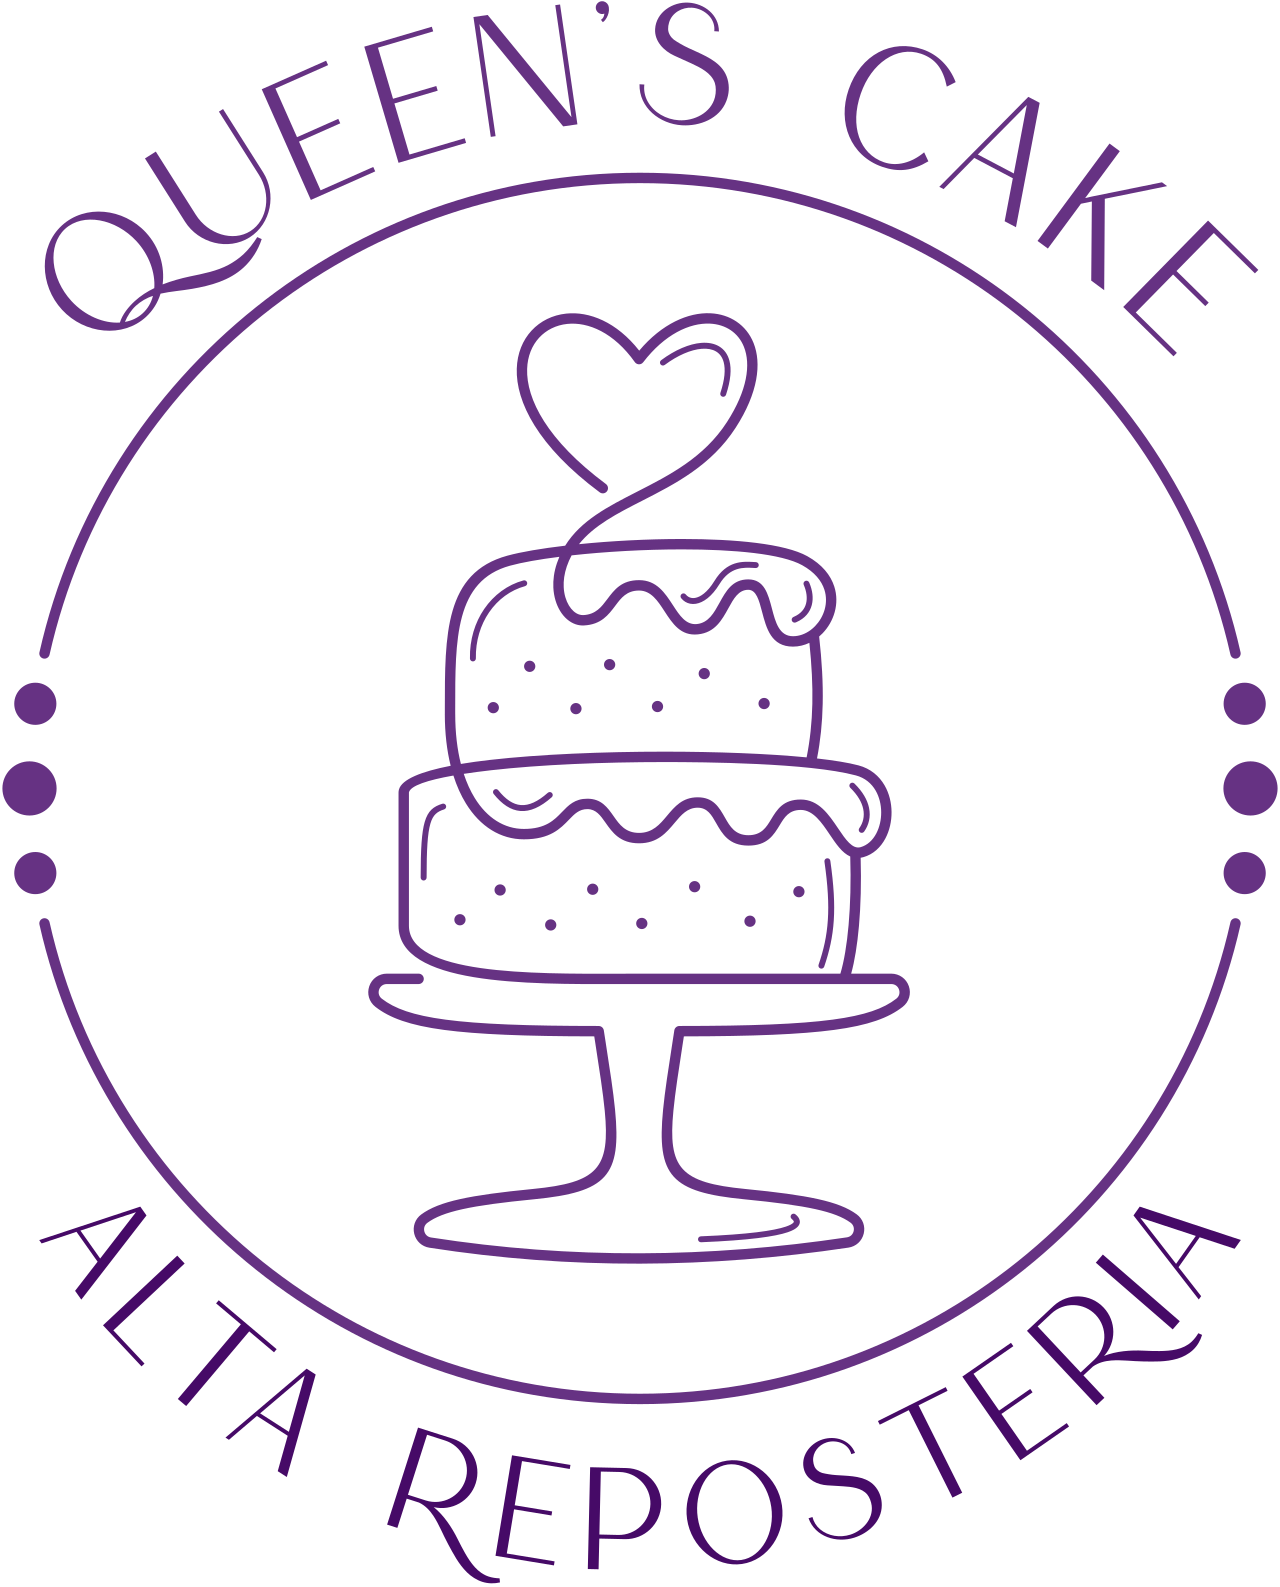 QUEEN'S CAKE's logo